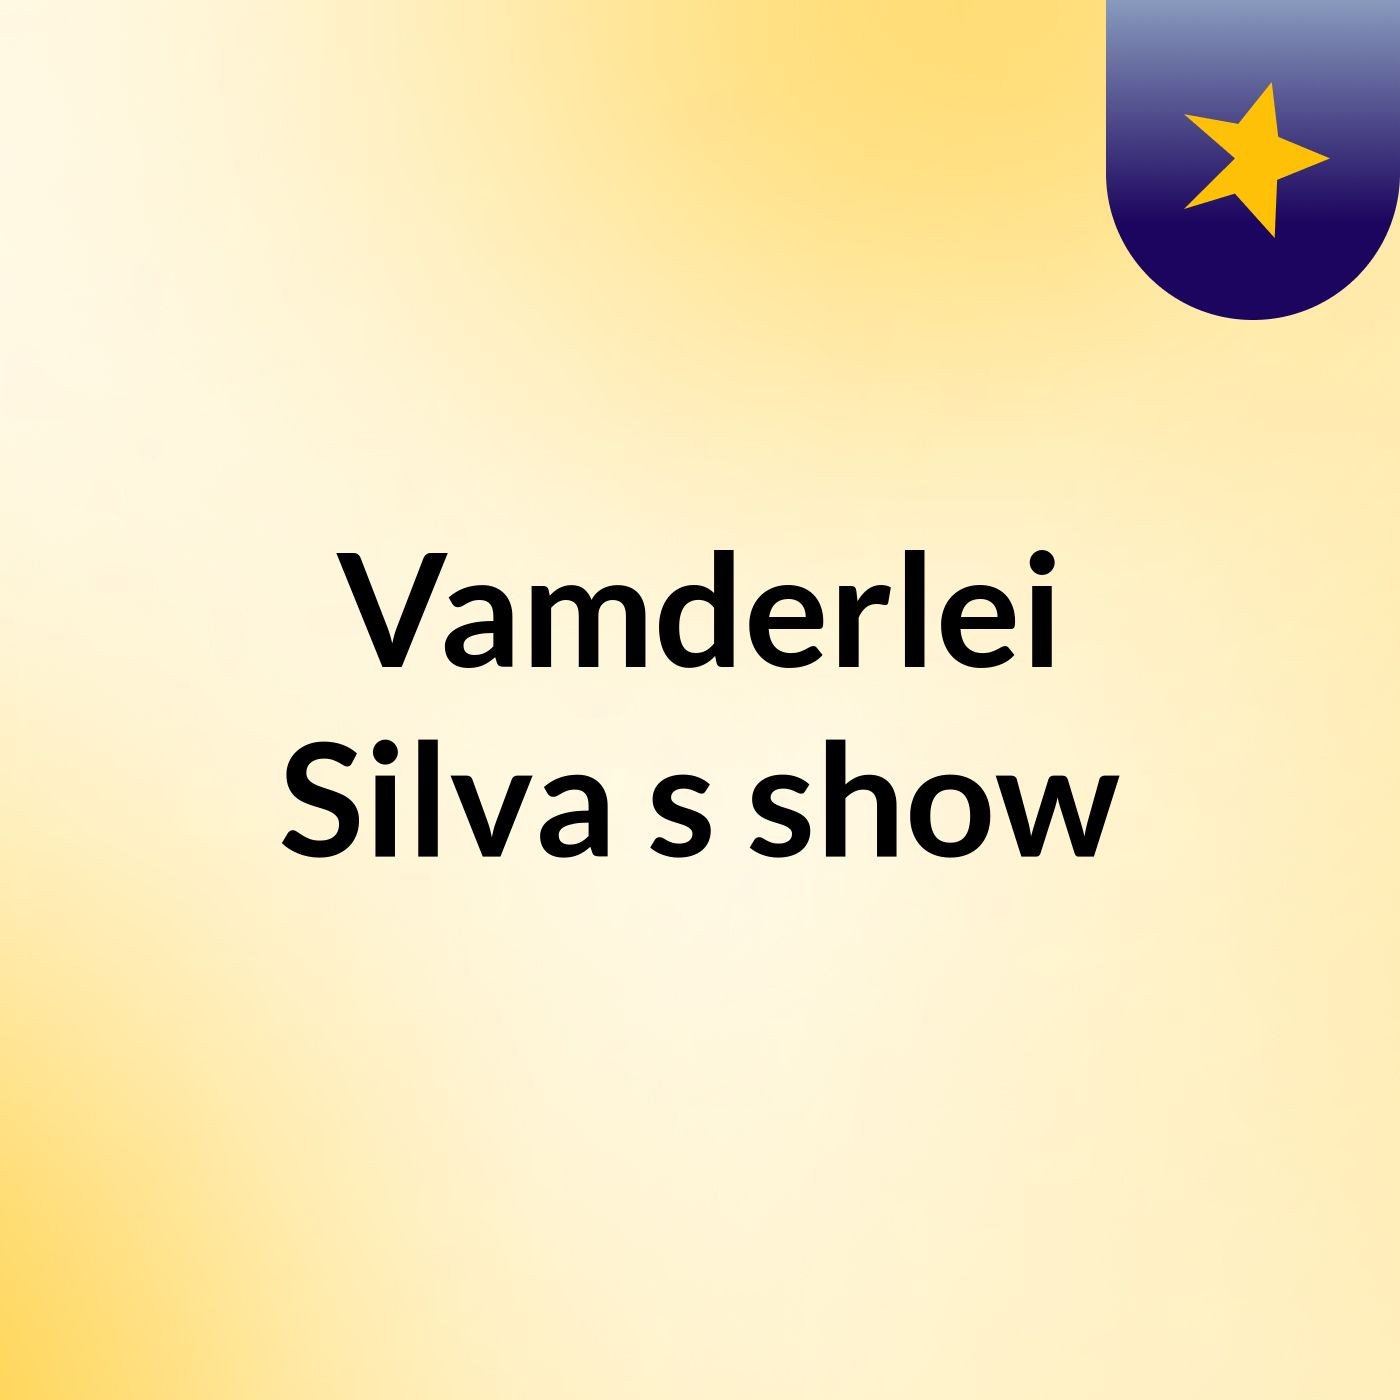 Vamderlei Silva's show